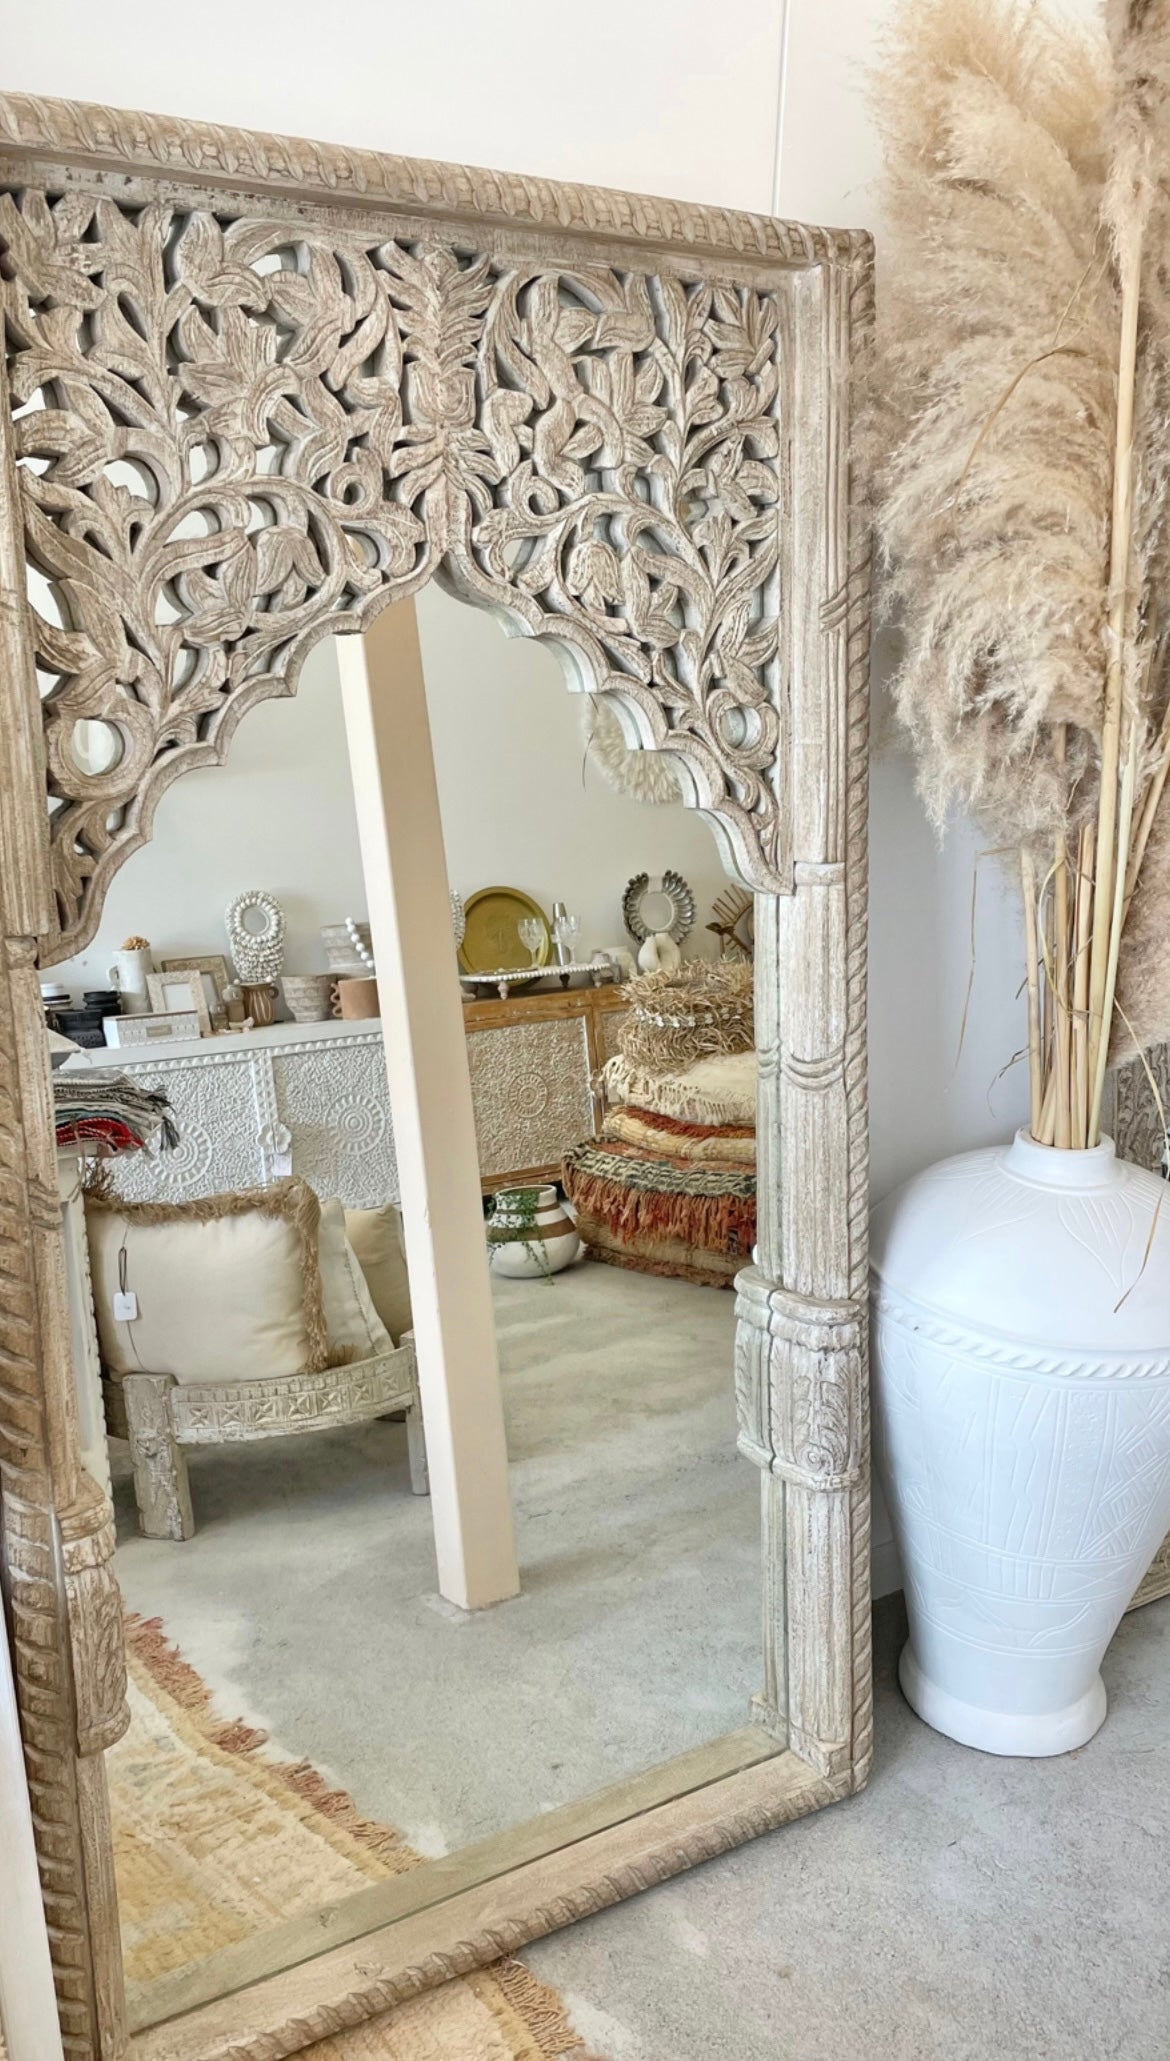 Large Indian Yavana Mirror